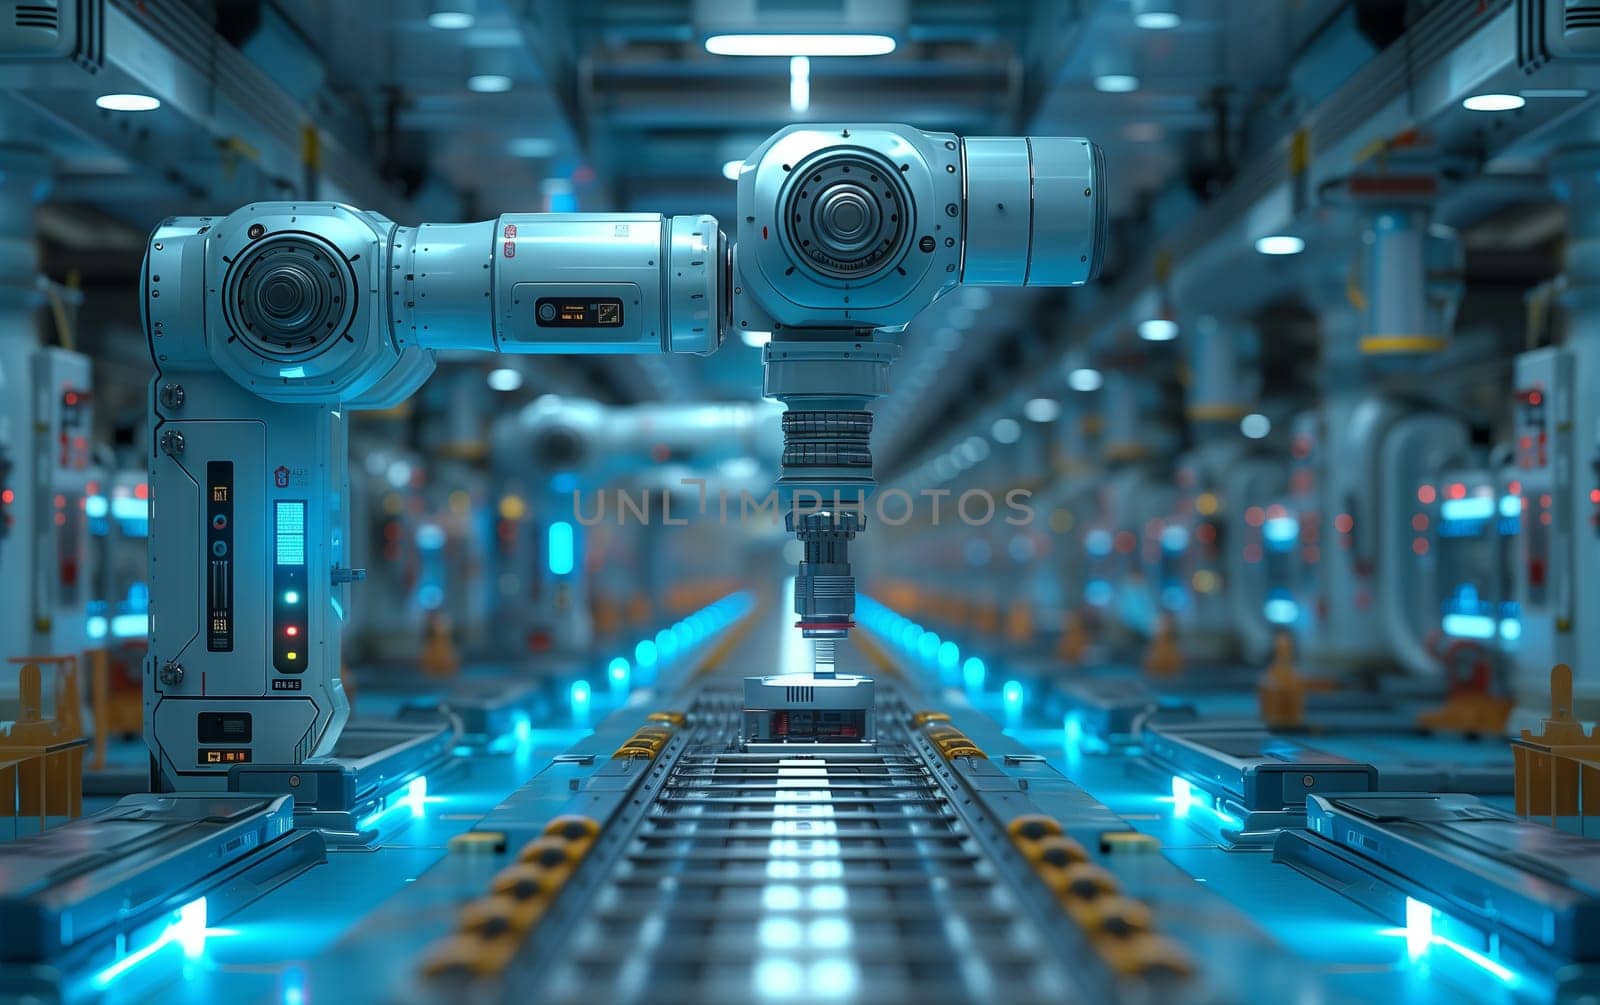 Aqua robotic arm on conveyor belt in Engineering factory by richwolf